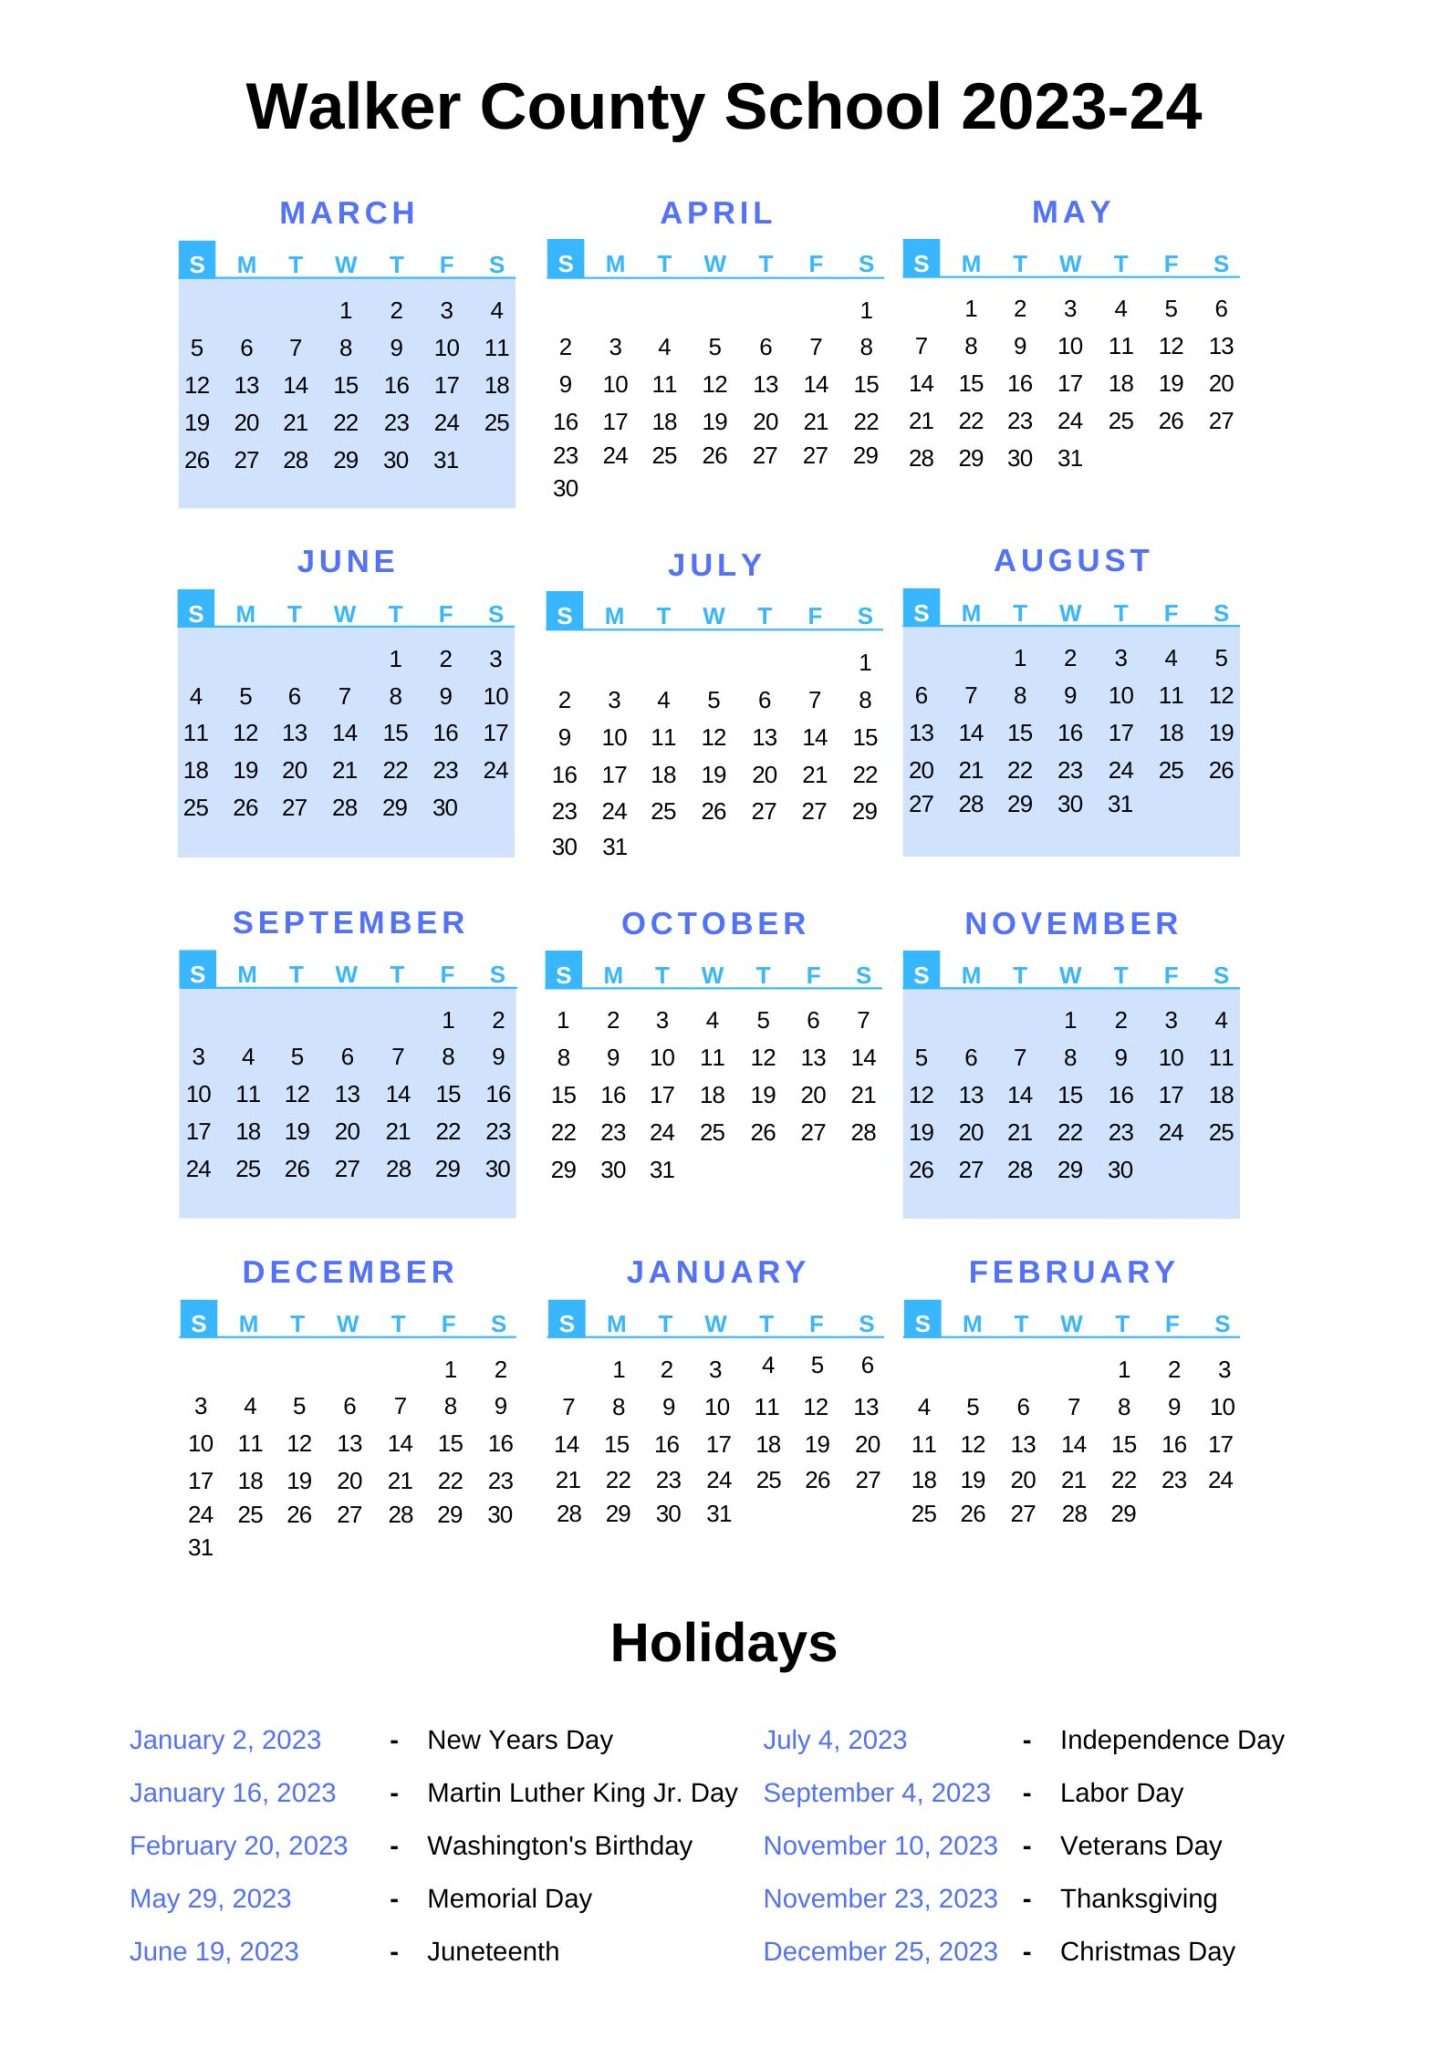 Walker County Schools Calendar 2023 24 With Holidays